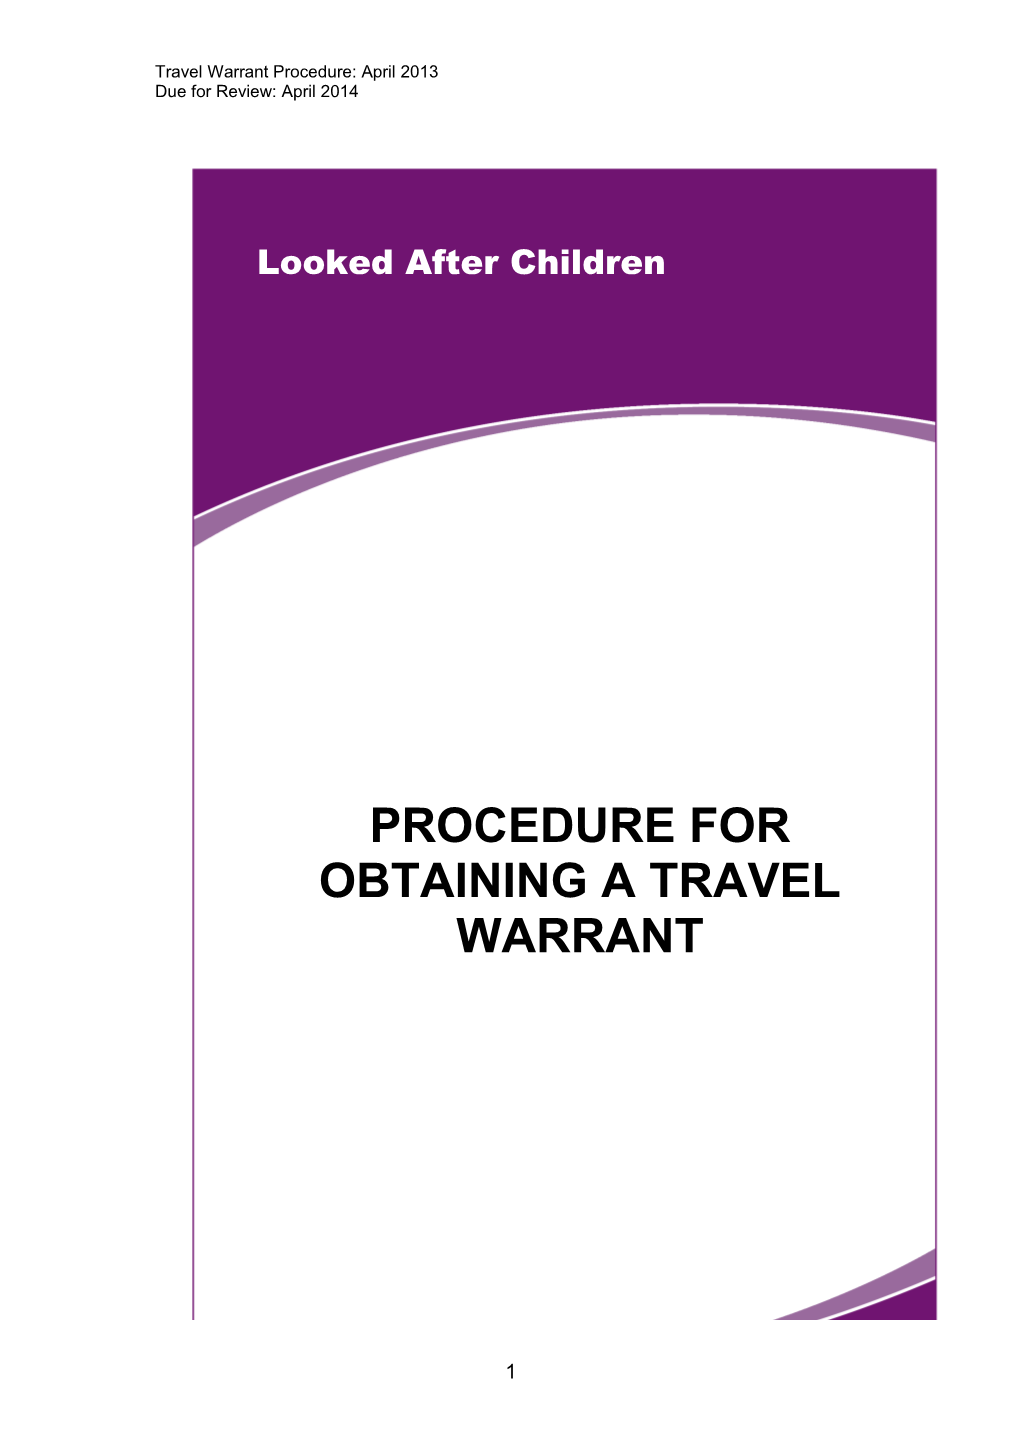 Travel Warrant Procedure Final 3